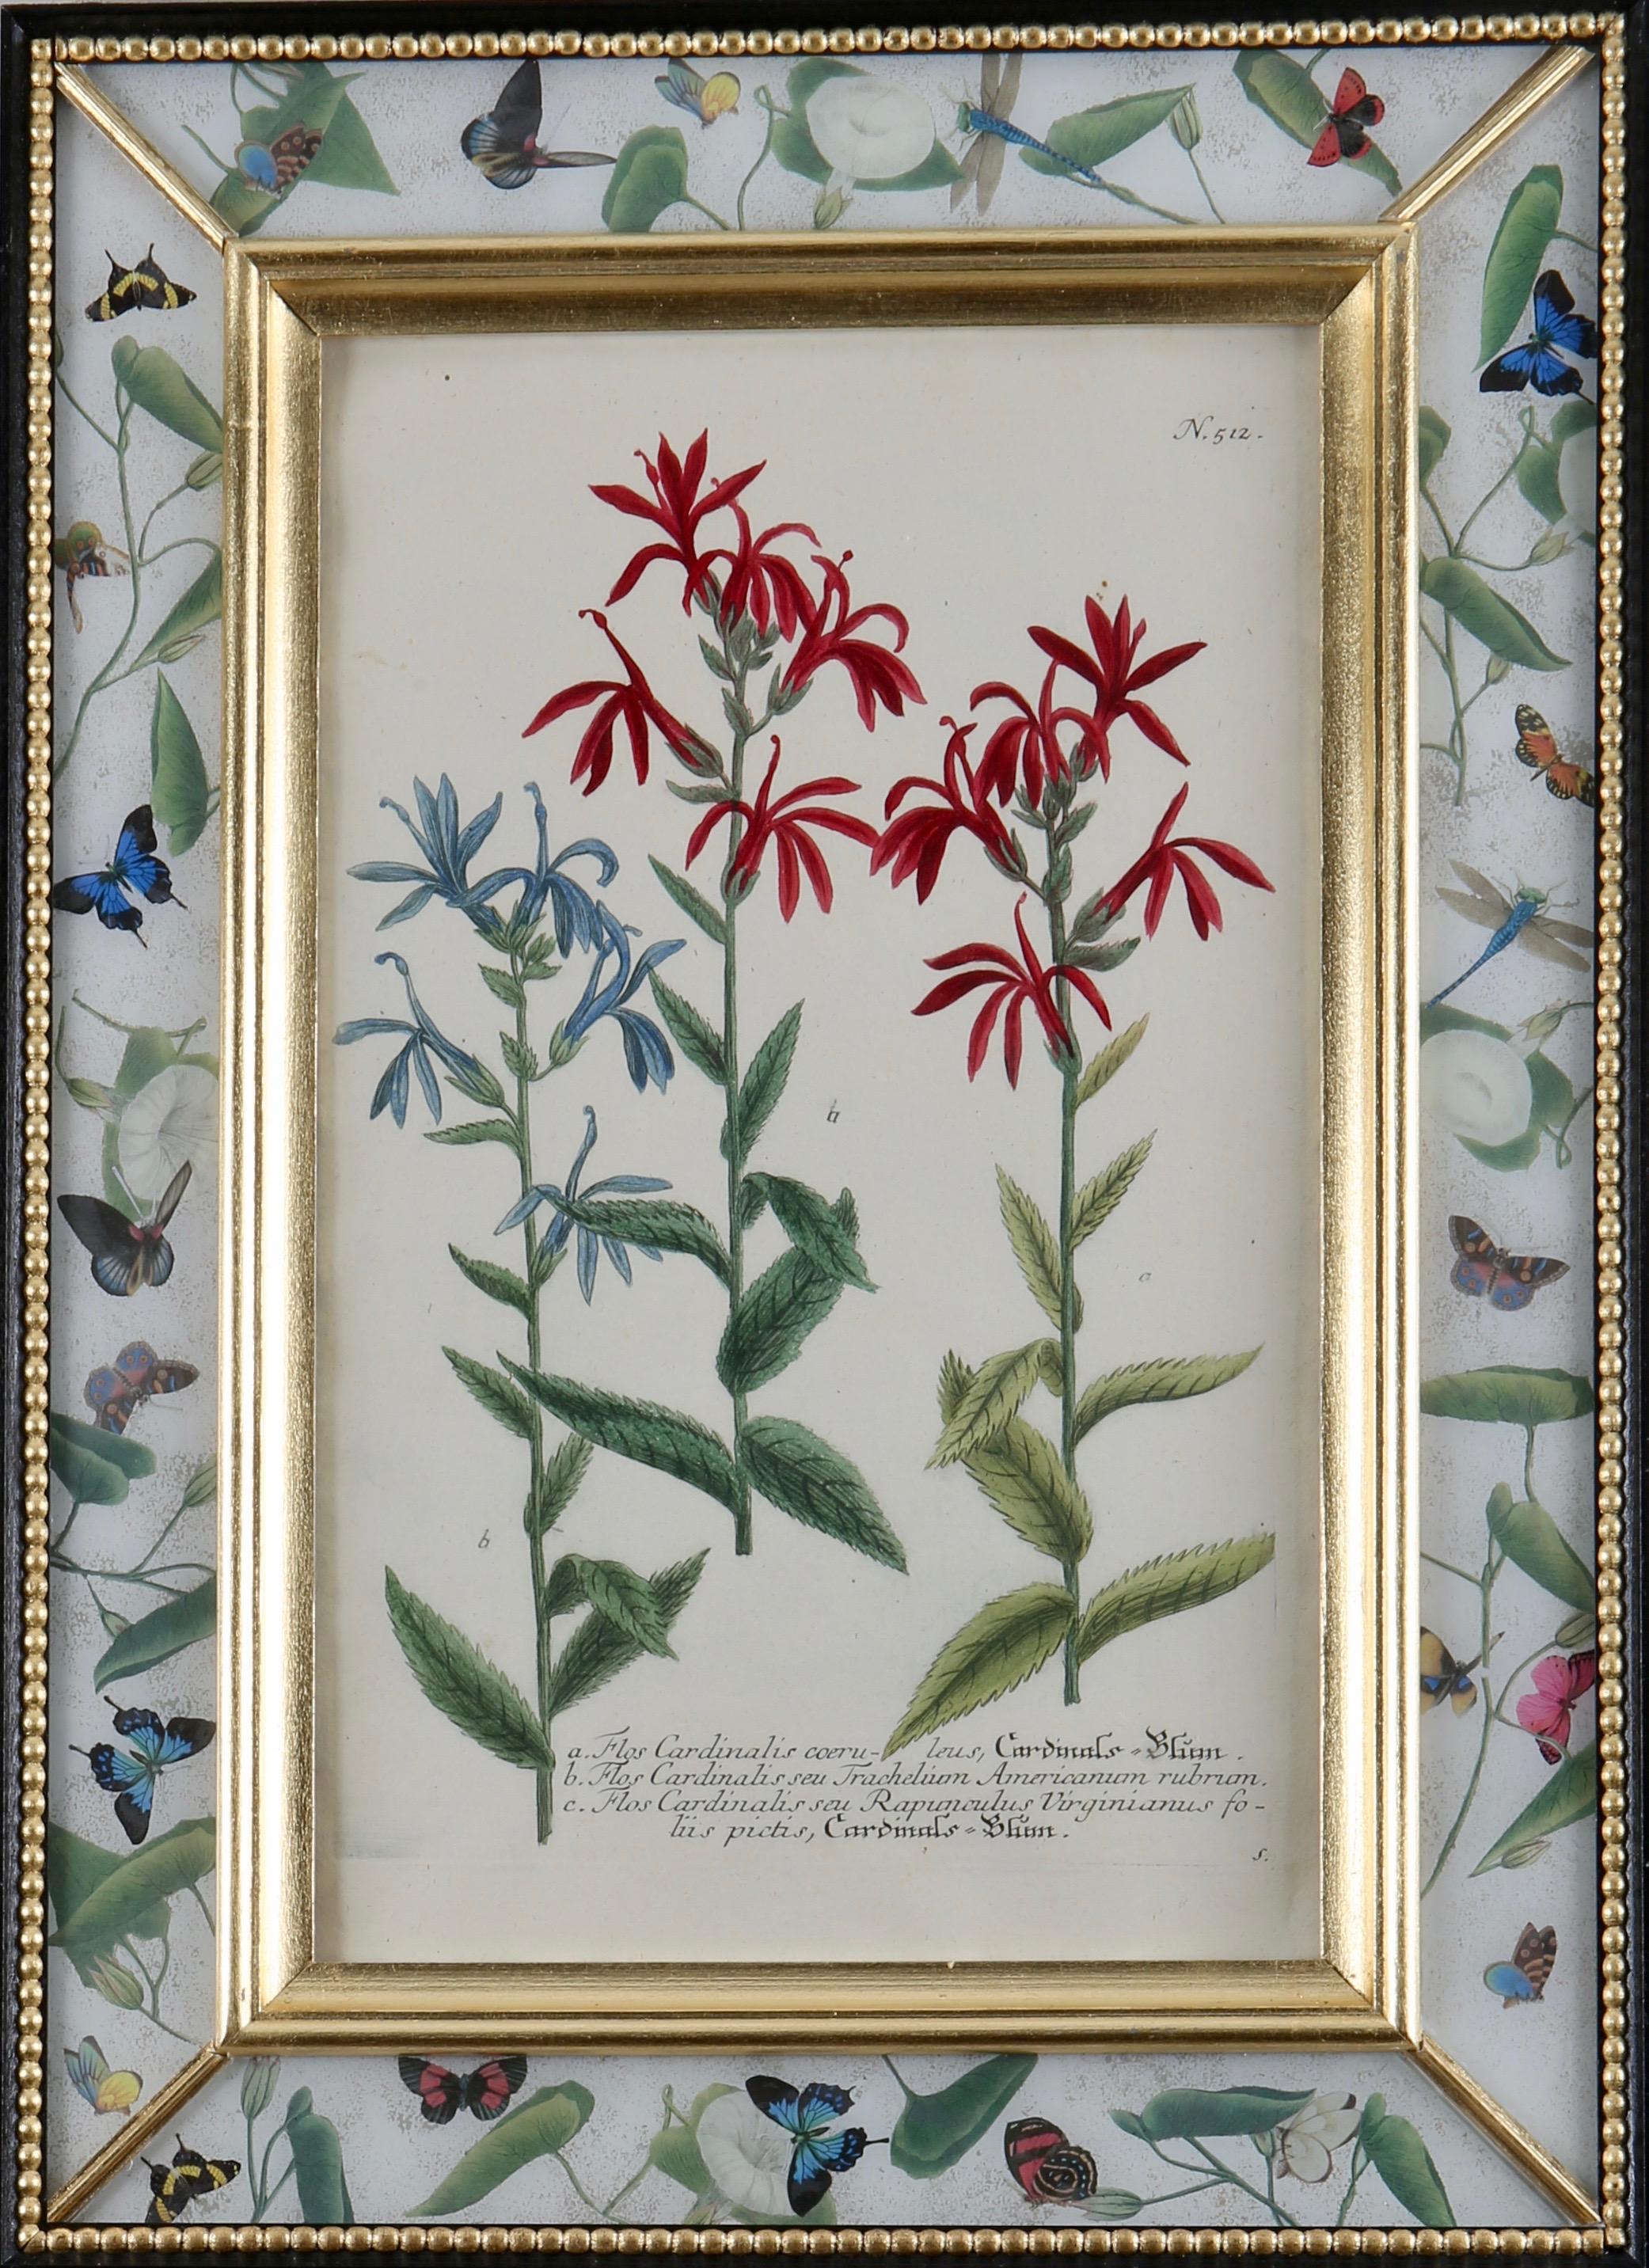 Johann Wilhelm Weinmann Figurative Print - Framed eighteenth century botanical engraving in a decalcomania frame.